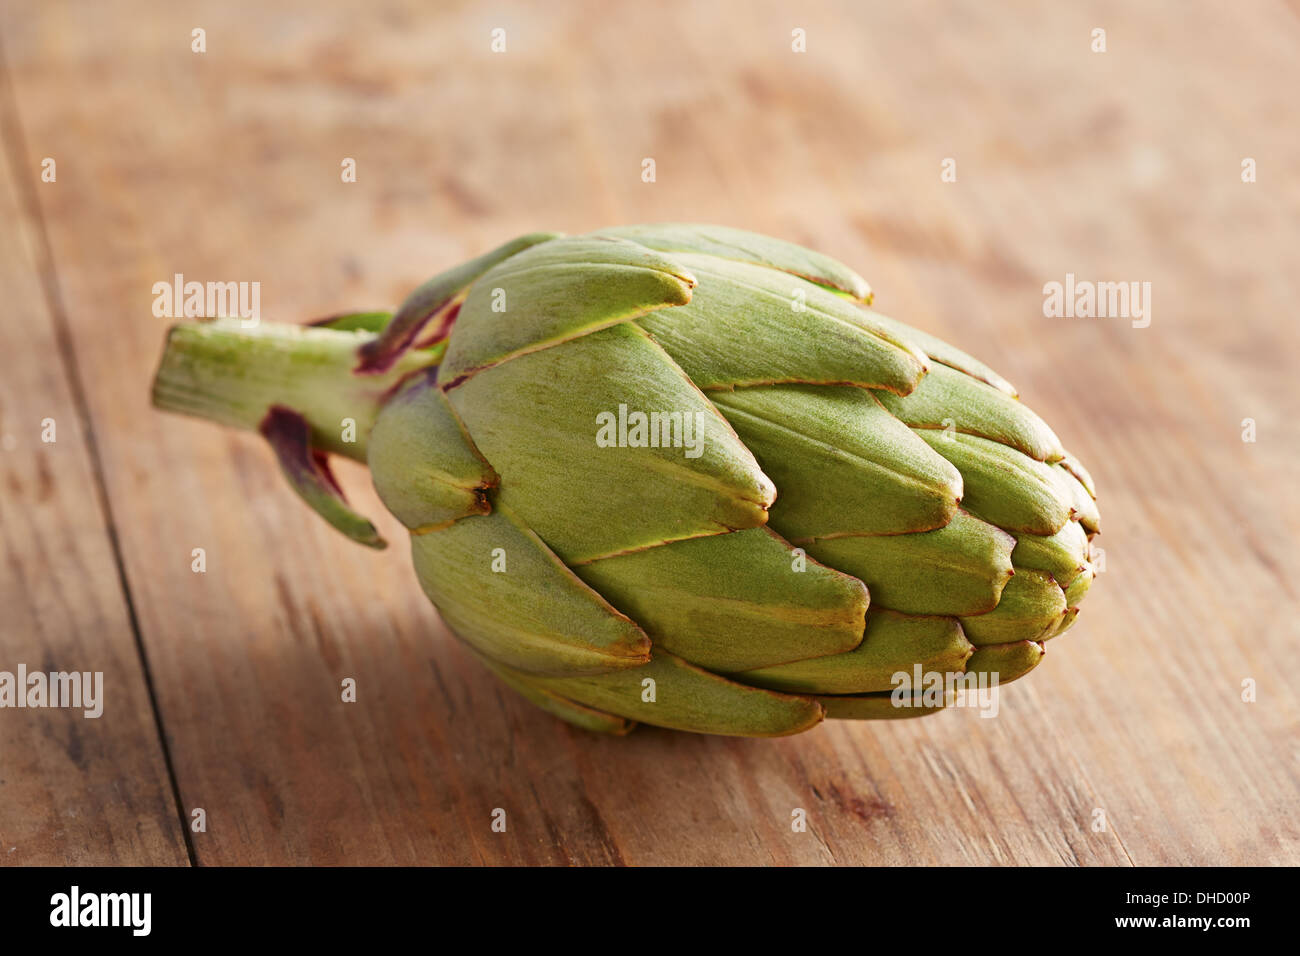 Single raw artichoke on wooden table Stock Photo